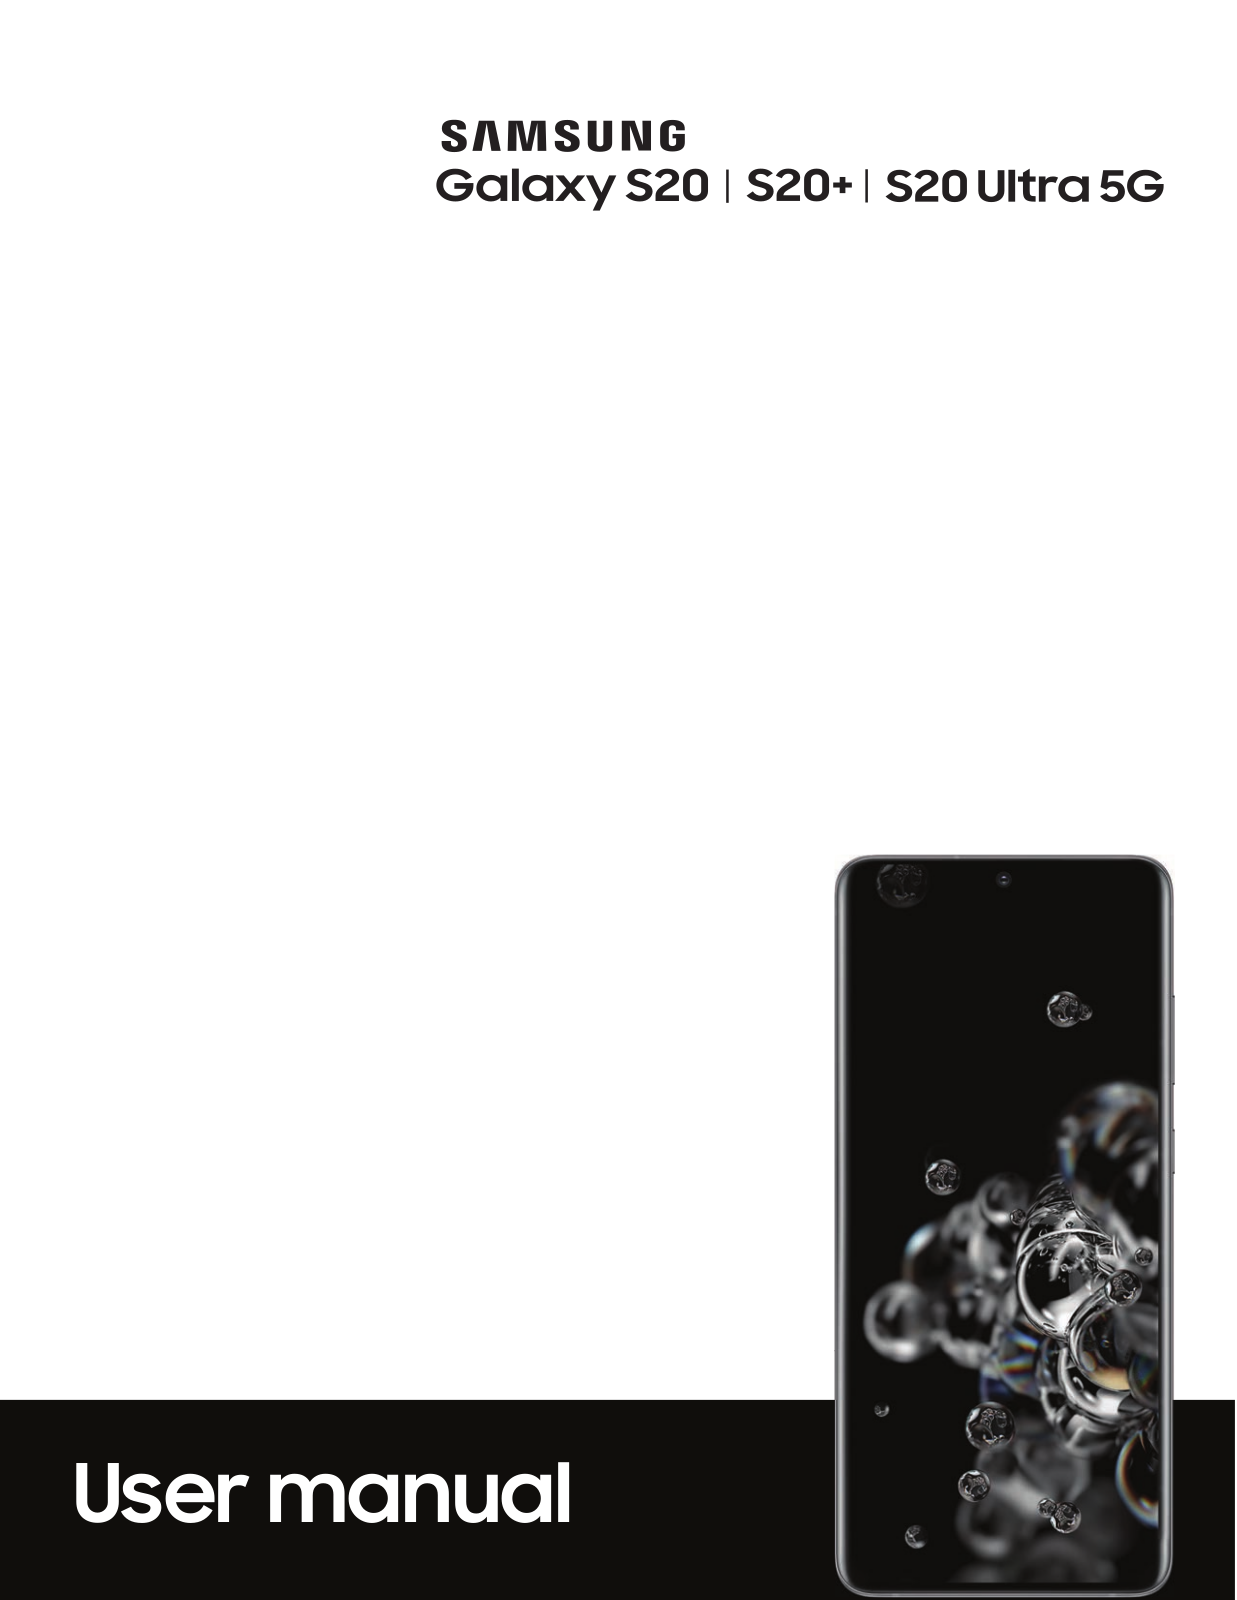 Samsung S20+, S20 Ultra 5G User Manual